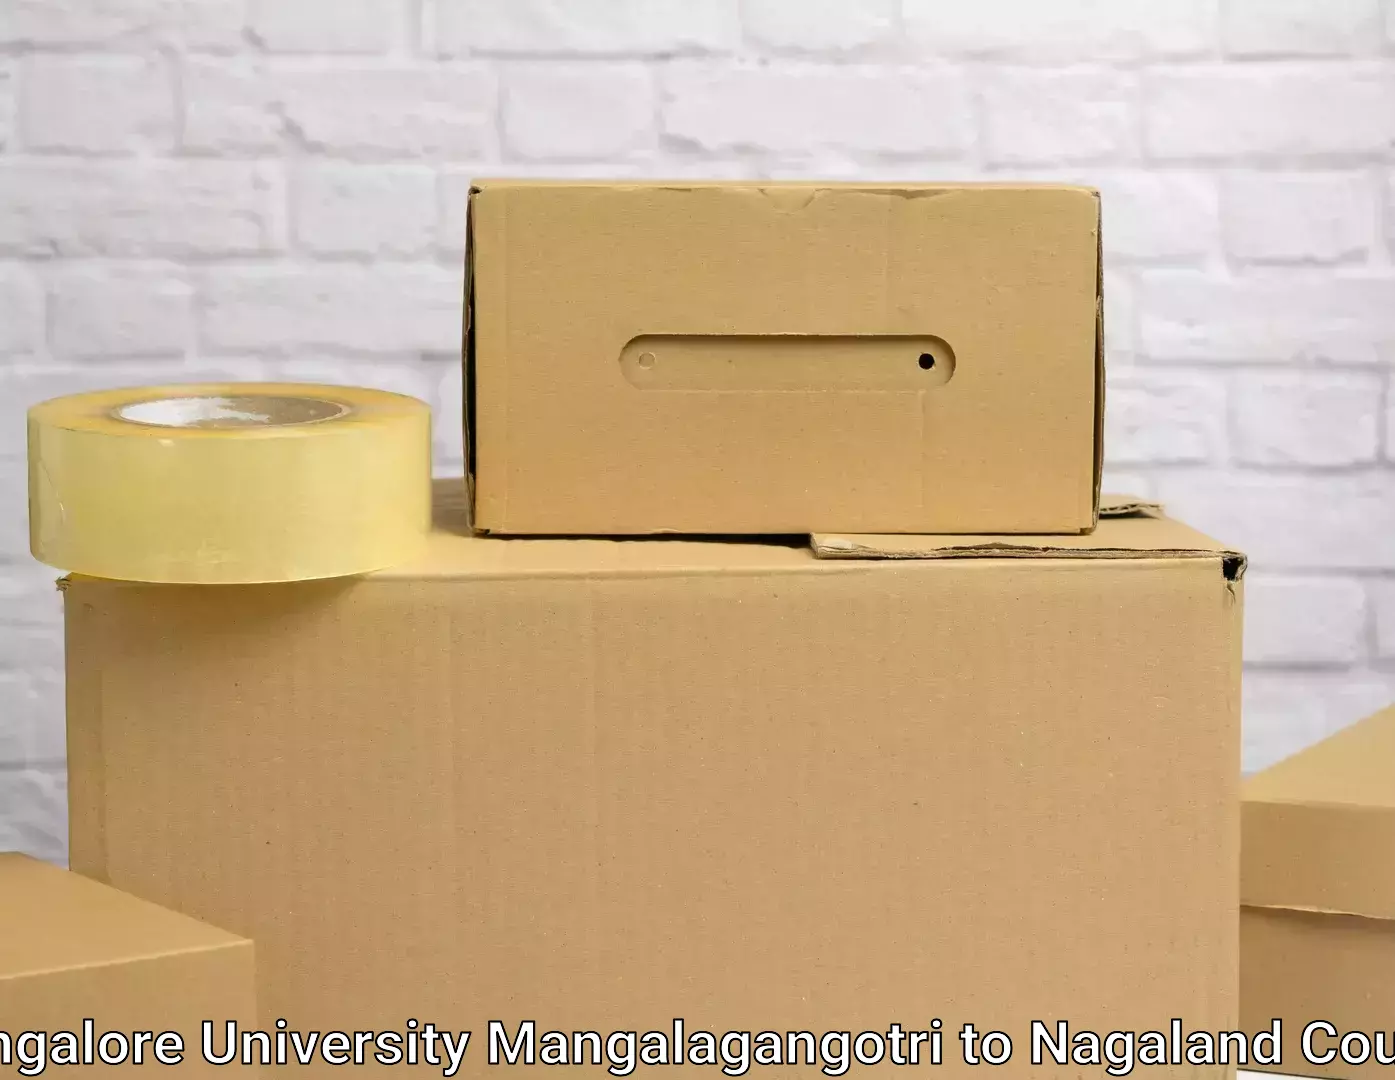 Furniture transport company Mangalore University Mangalagangotri to Nagaland